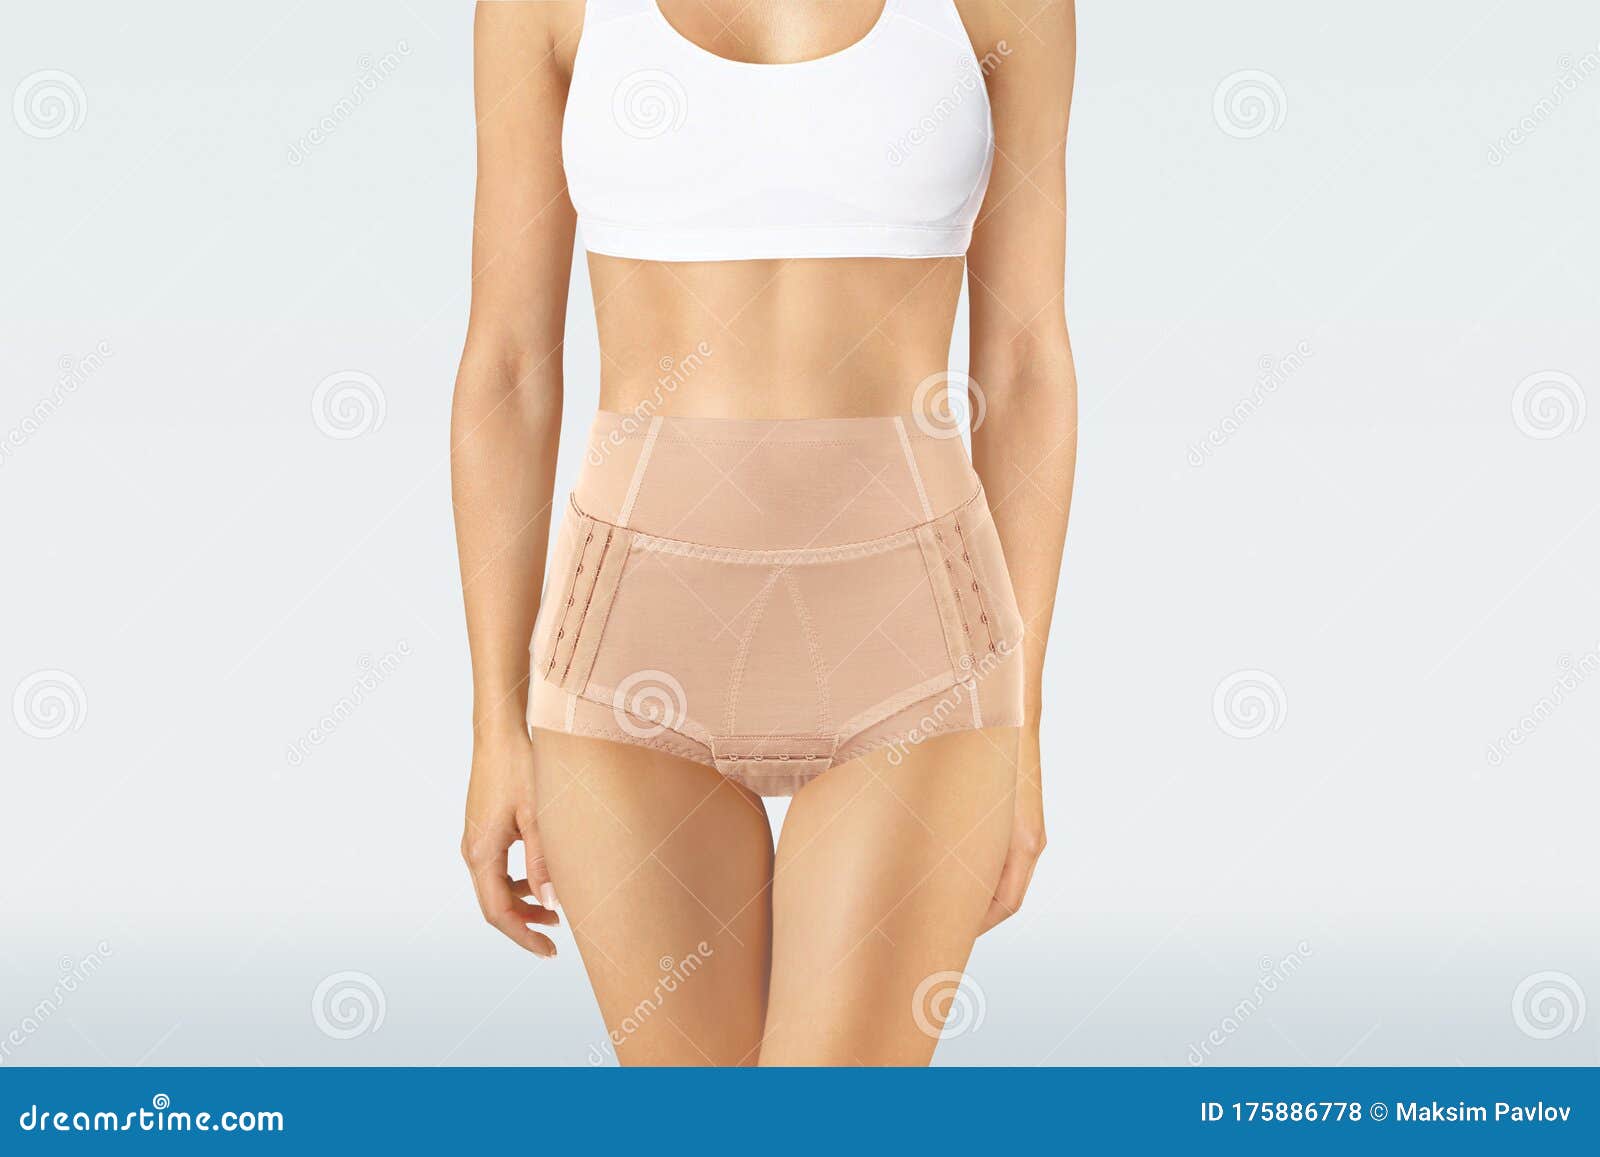 103 Postpartum Underwear Stock Photos - Free & Royalty-Free Stock